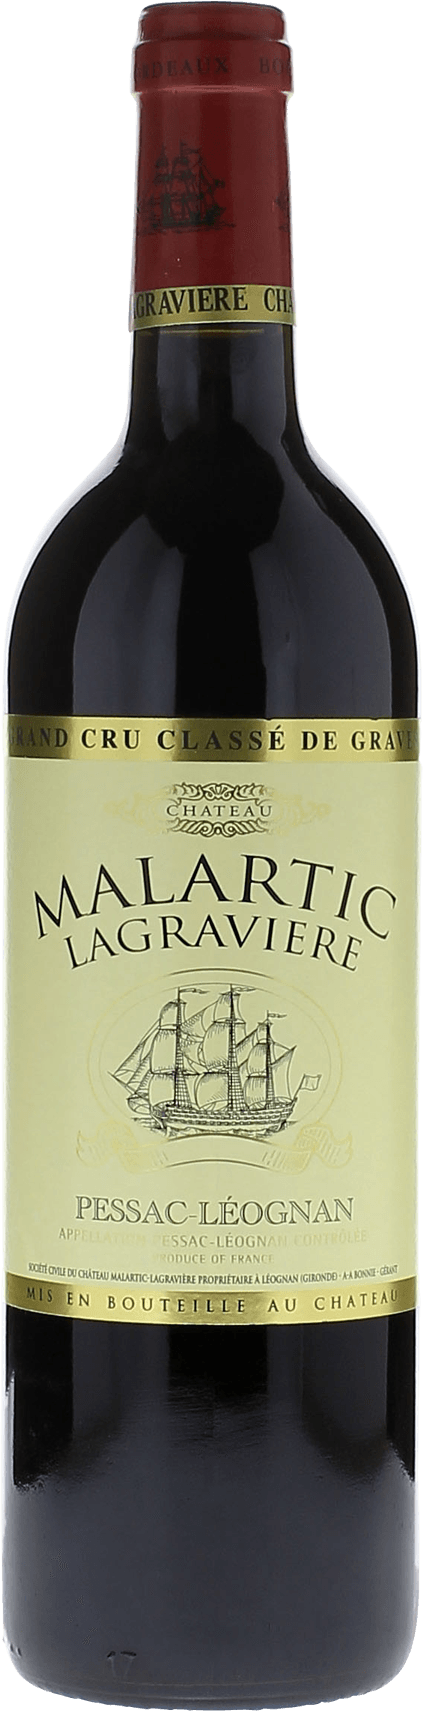 Malartic lagraviere rouge 2016 Grand Cru Class Graves, Bordeaux rouge